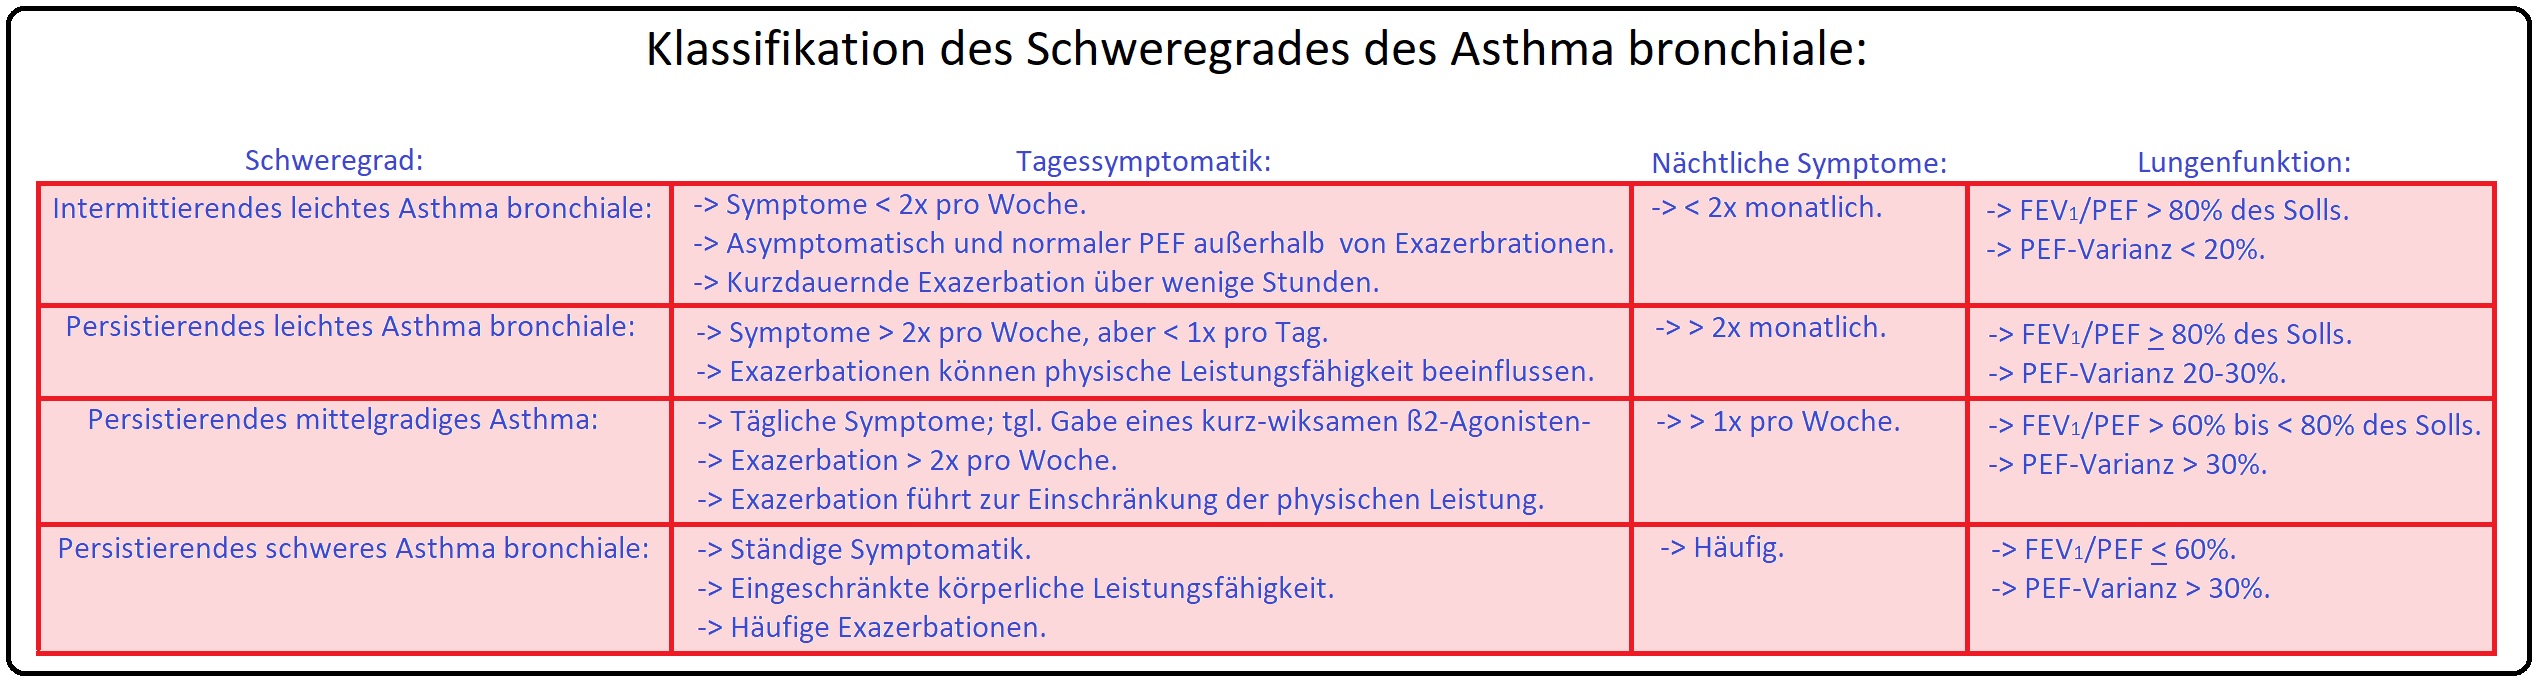 983 Klassifikation des Schweregrades des Asthma bronchiale